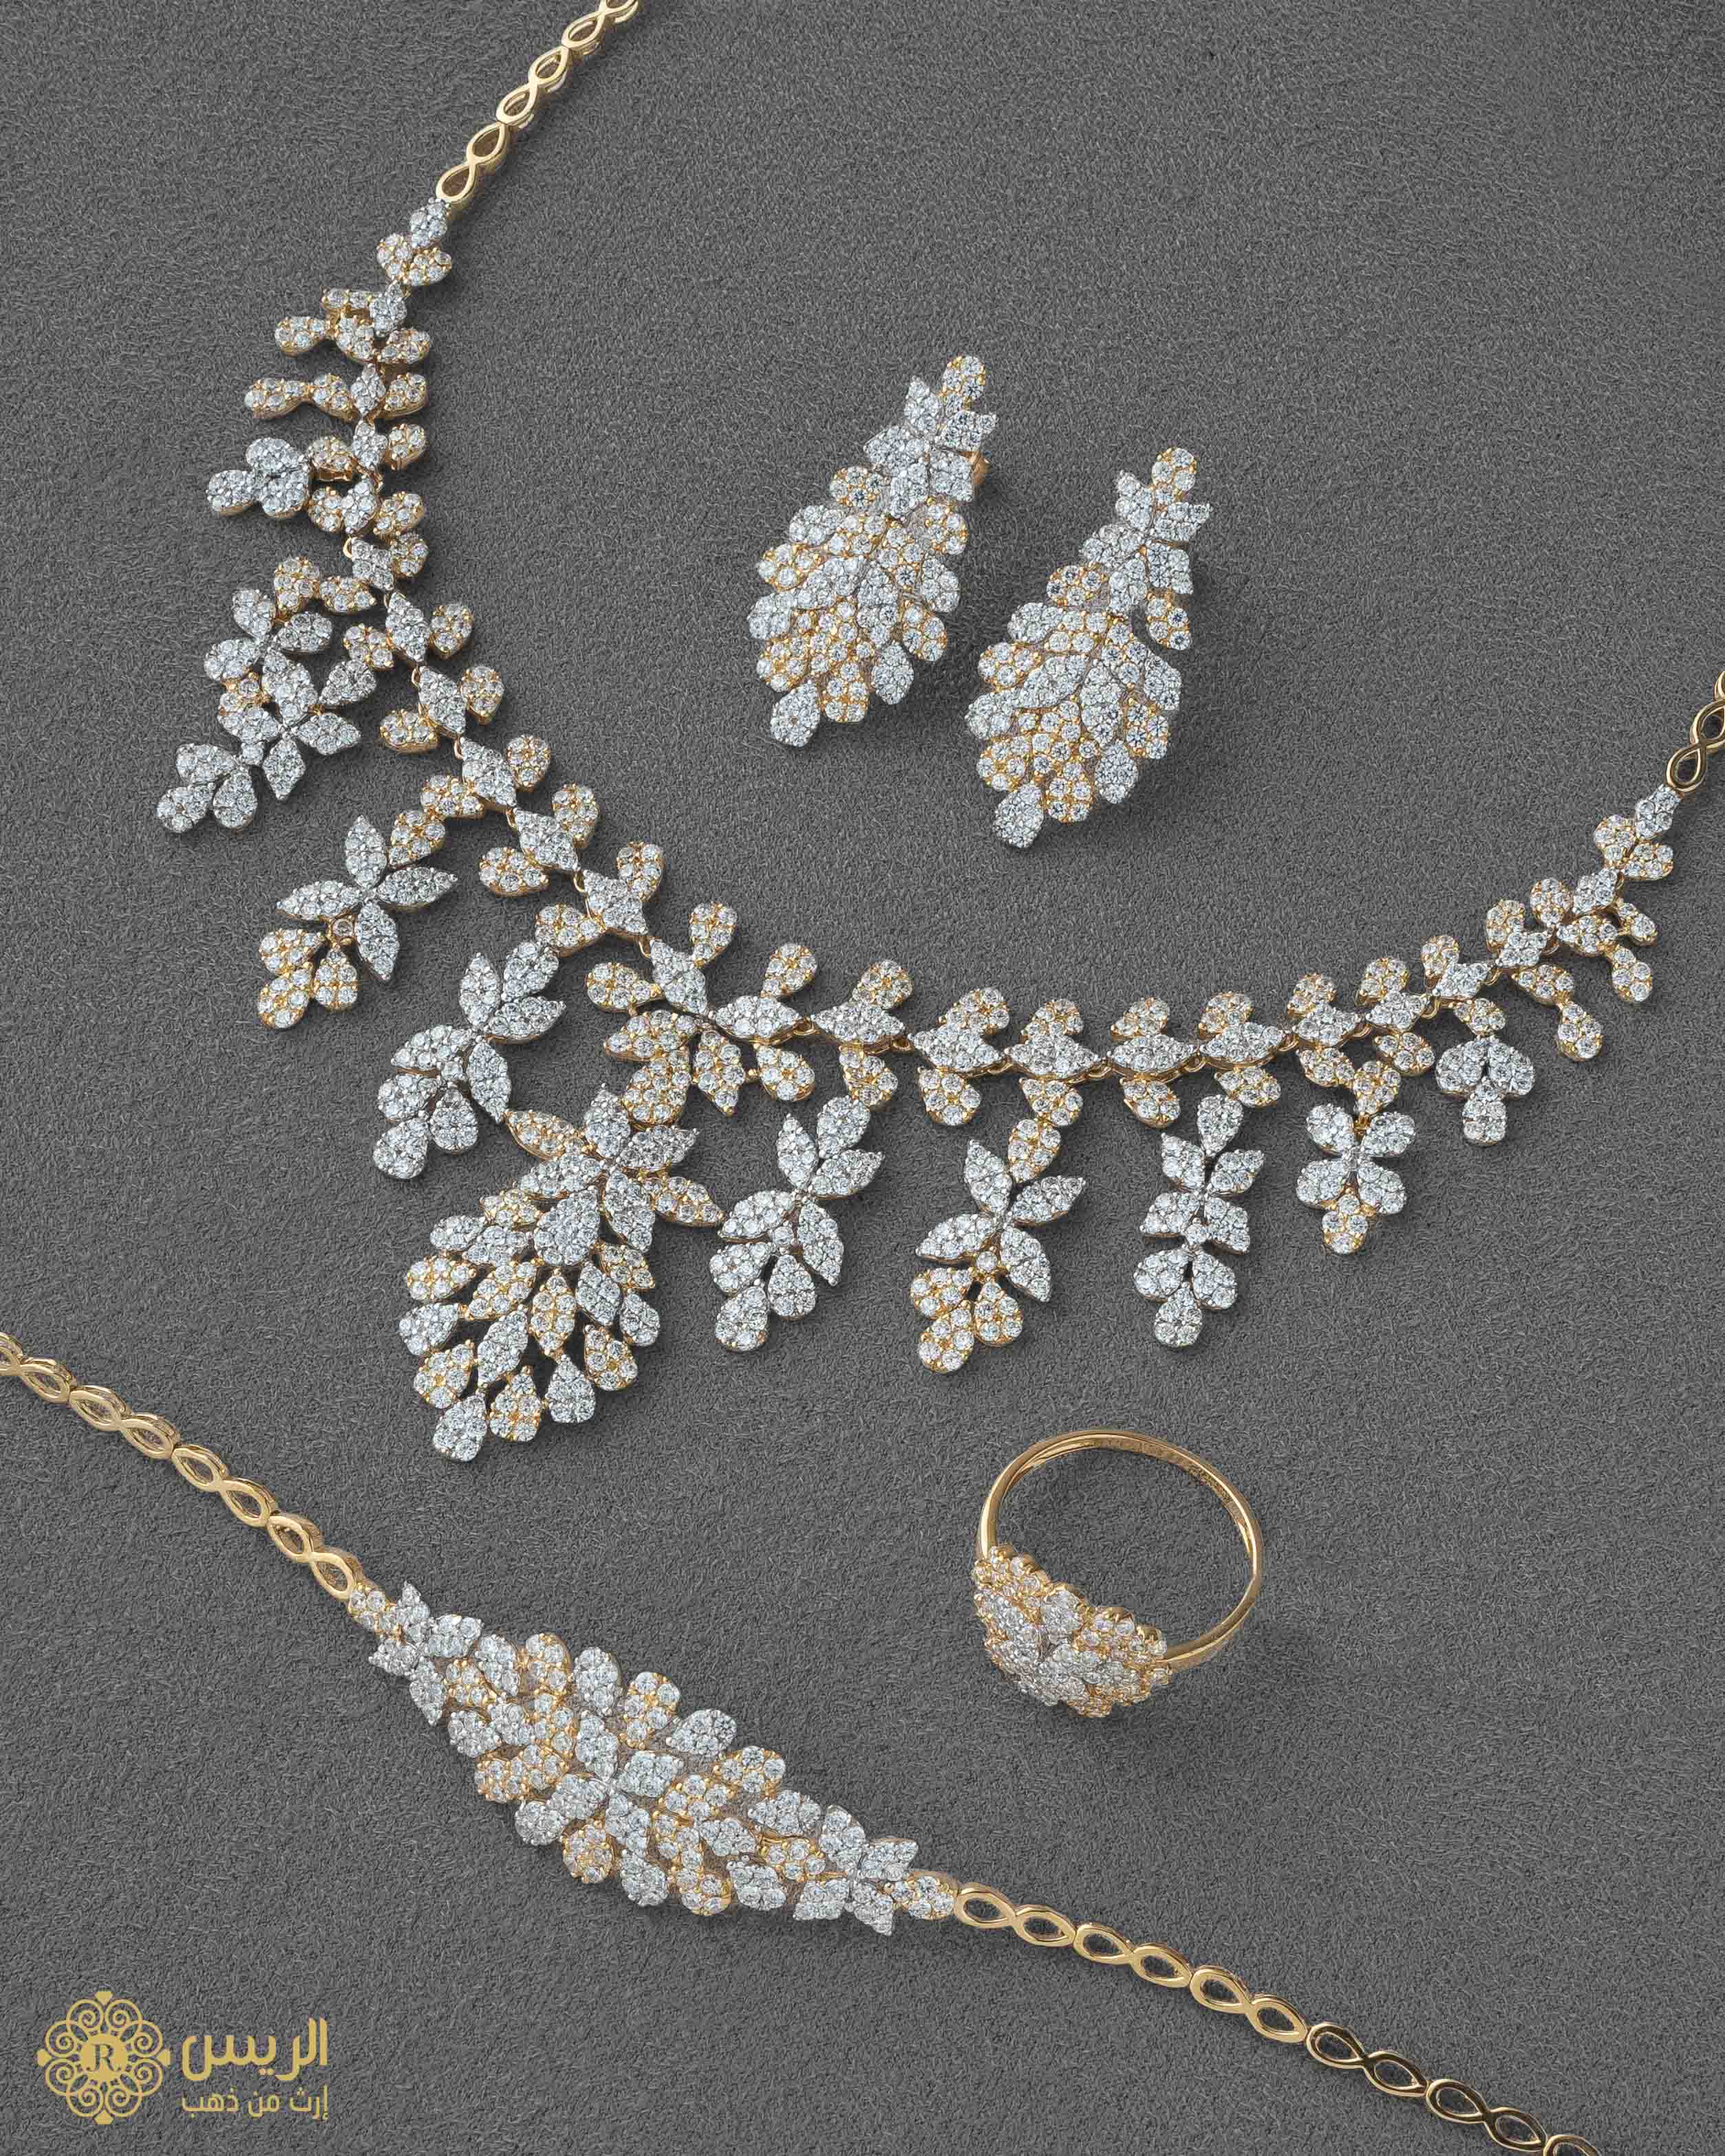 Raies jewelry Delicate Full Set Classic Design طقم تصميم كلاسيكي الريس للمجوهرات